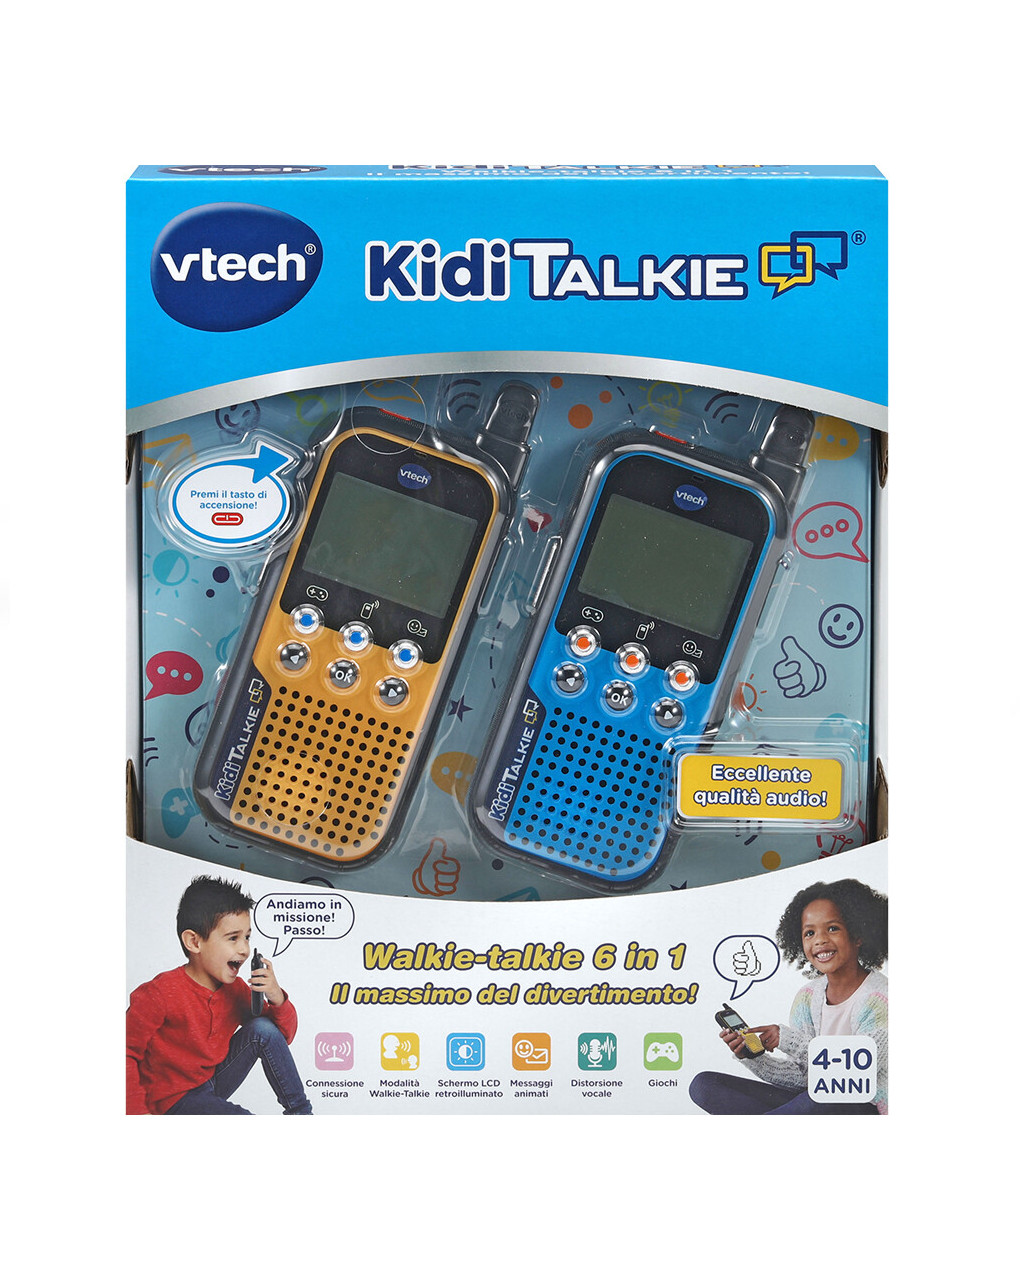 Kidi talkie ® 4-10 ann - vtech